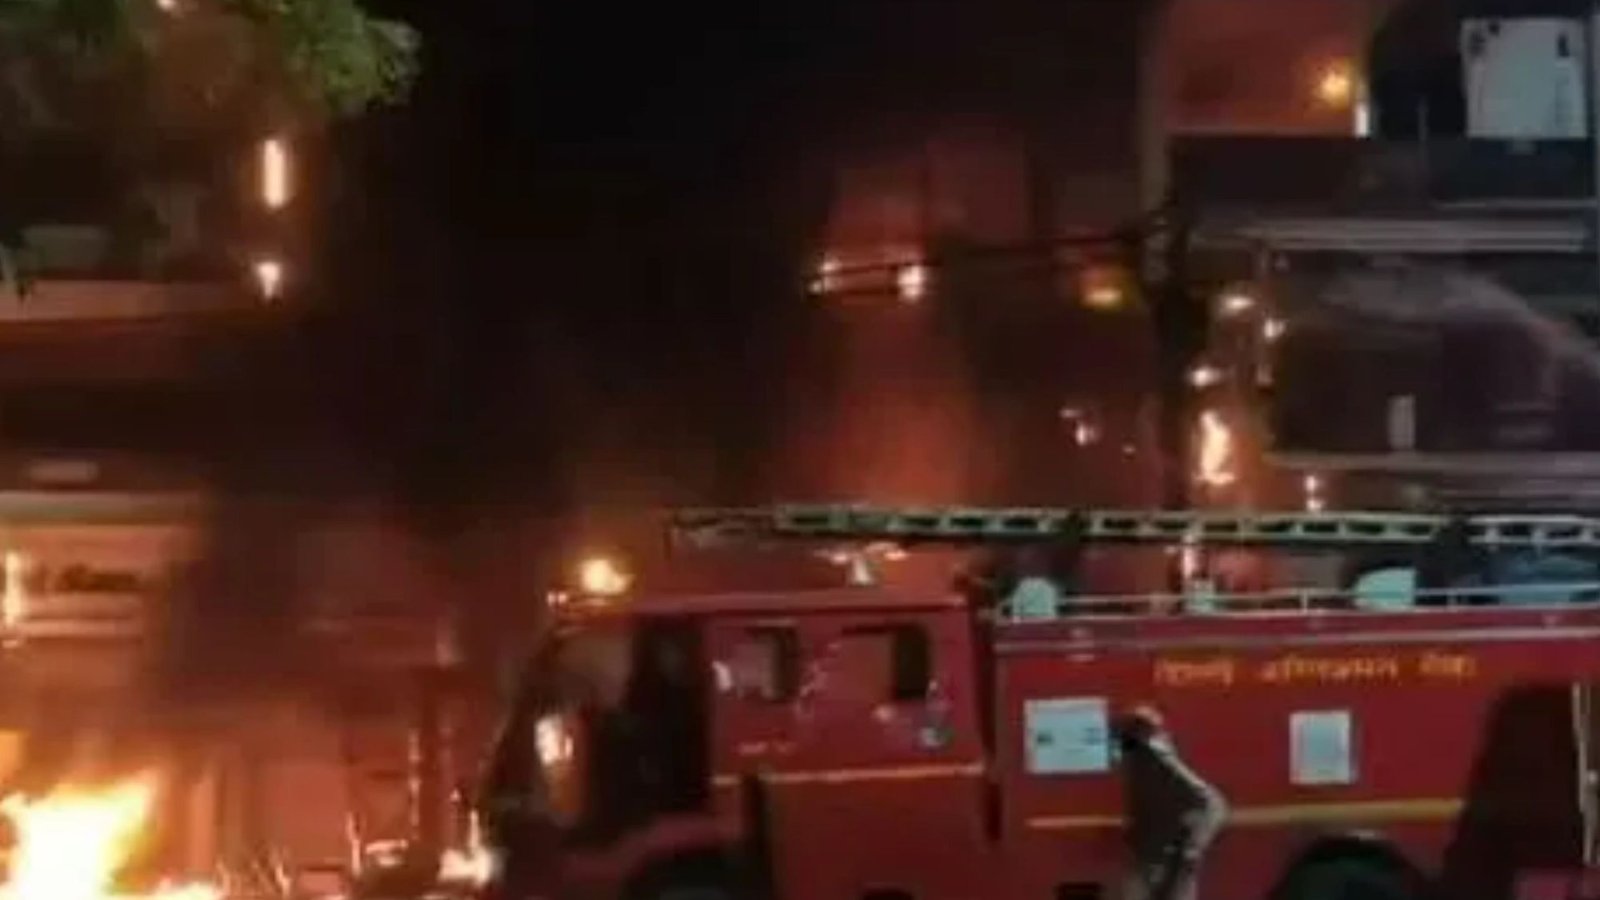 Seven babies killed & 5 injured after horror blaze breaks out on maternity ward as Delhi cops probe mystery inferno